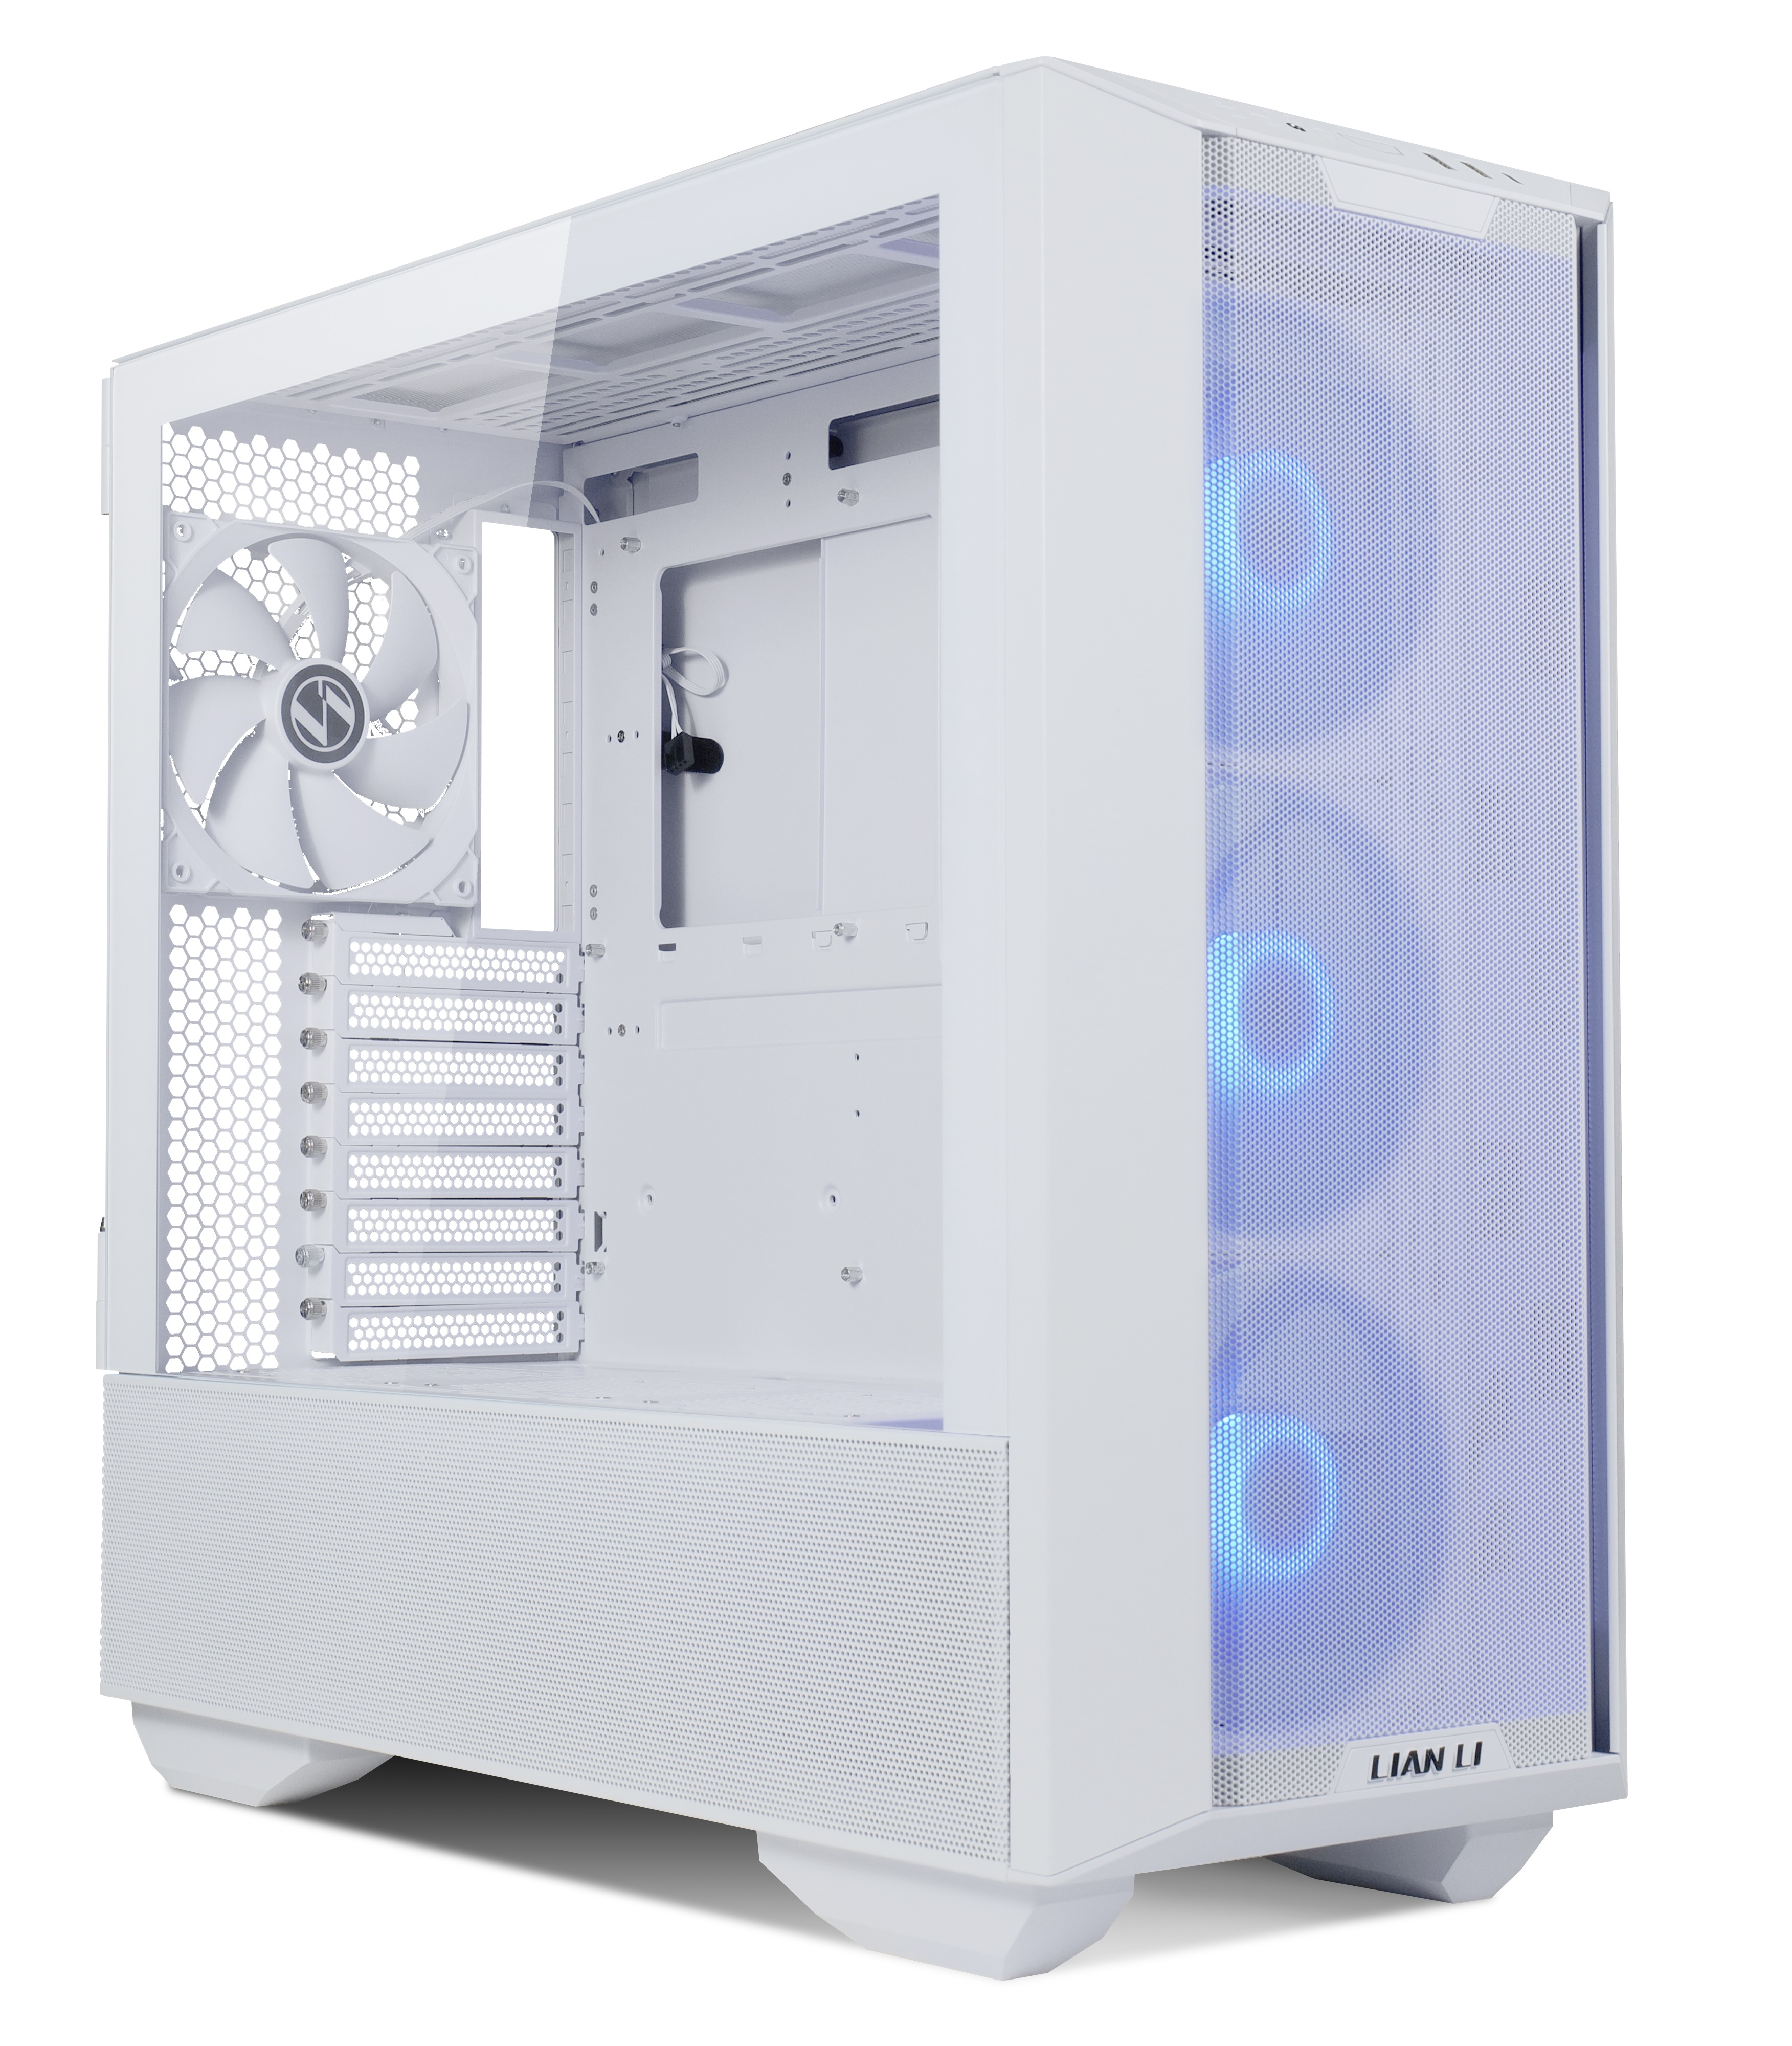  - Lian Li Lancool III RGB Full Tower PC Case - White